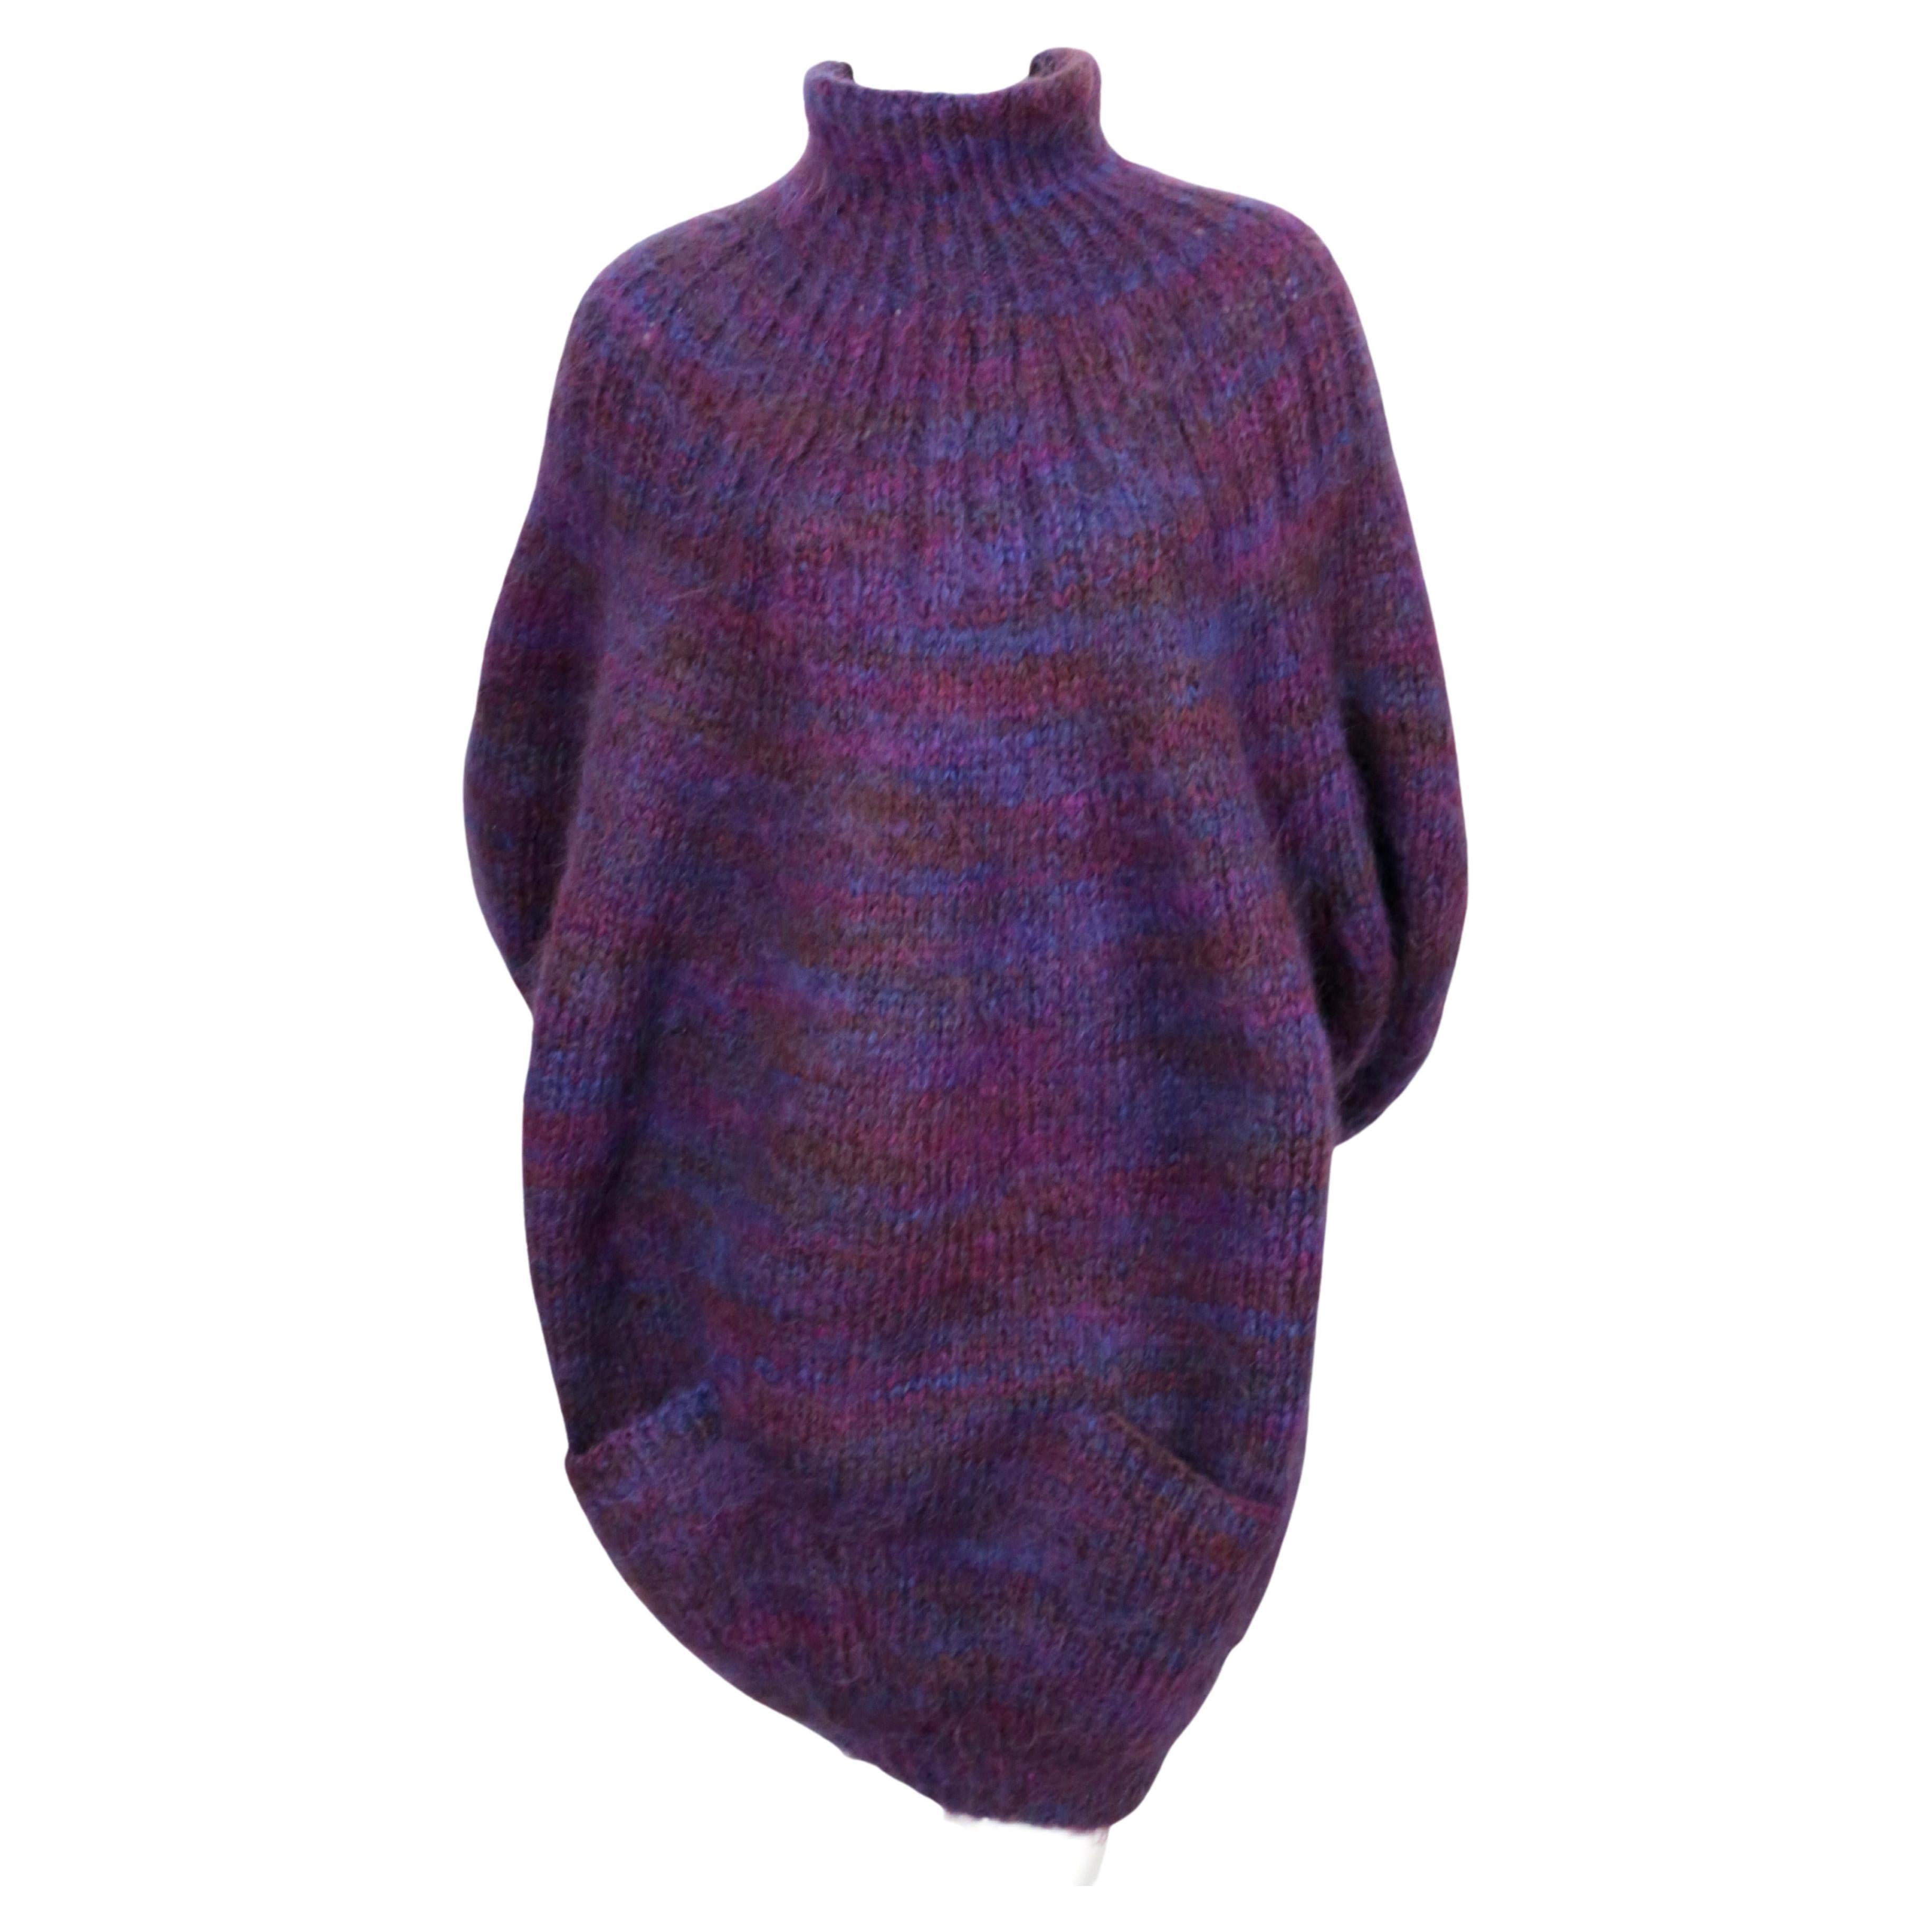 Black 1989 PERRY ELLIS by MARC JACOBS oversized purple handknit sweater dress